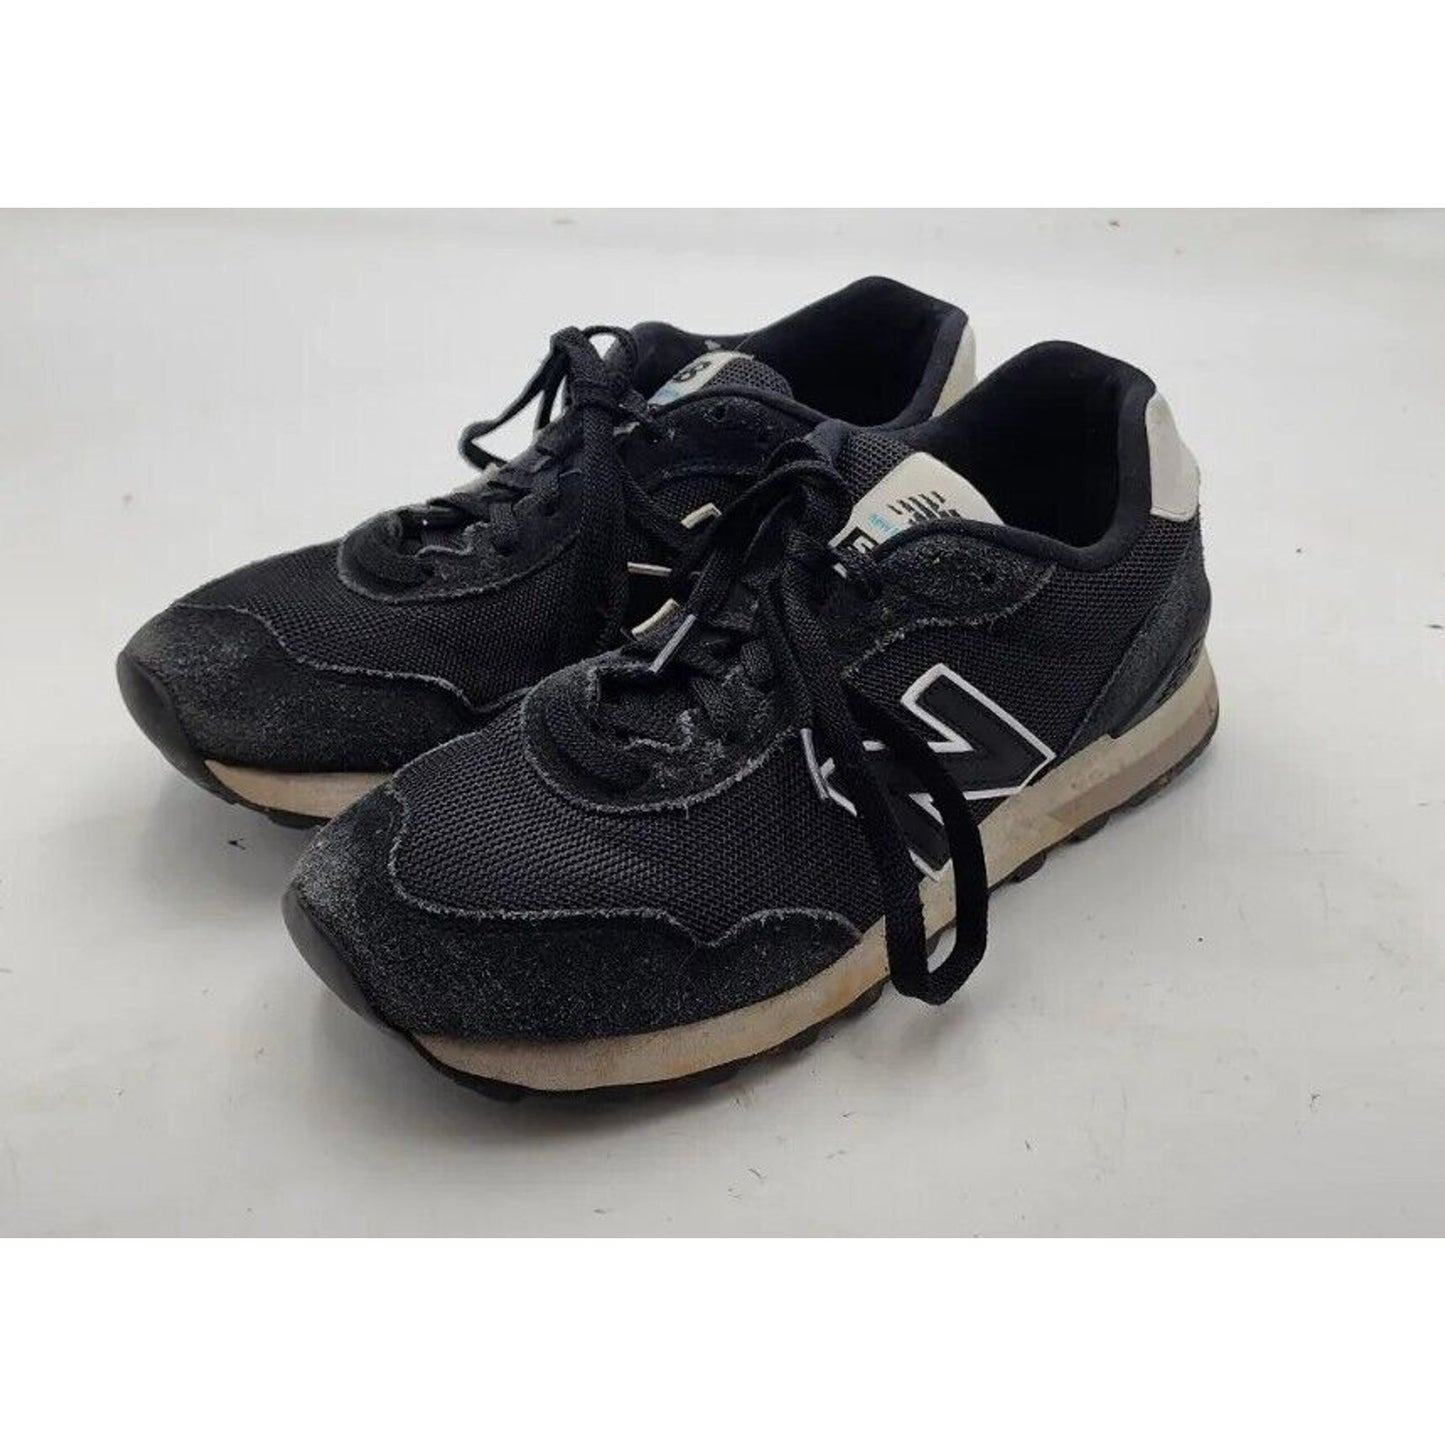 New Balance Womens Sie 8.5 B 515 V3 WL515RA3 Black Casual Shoes Sneakers